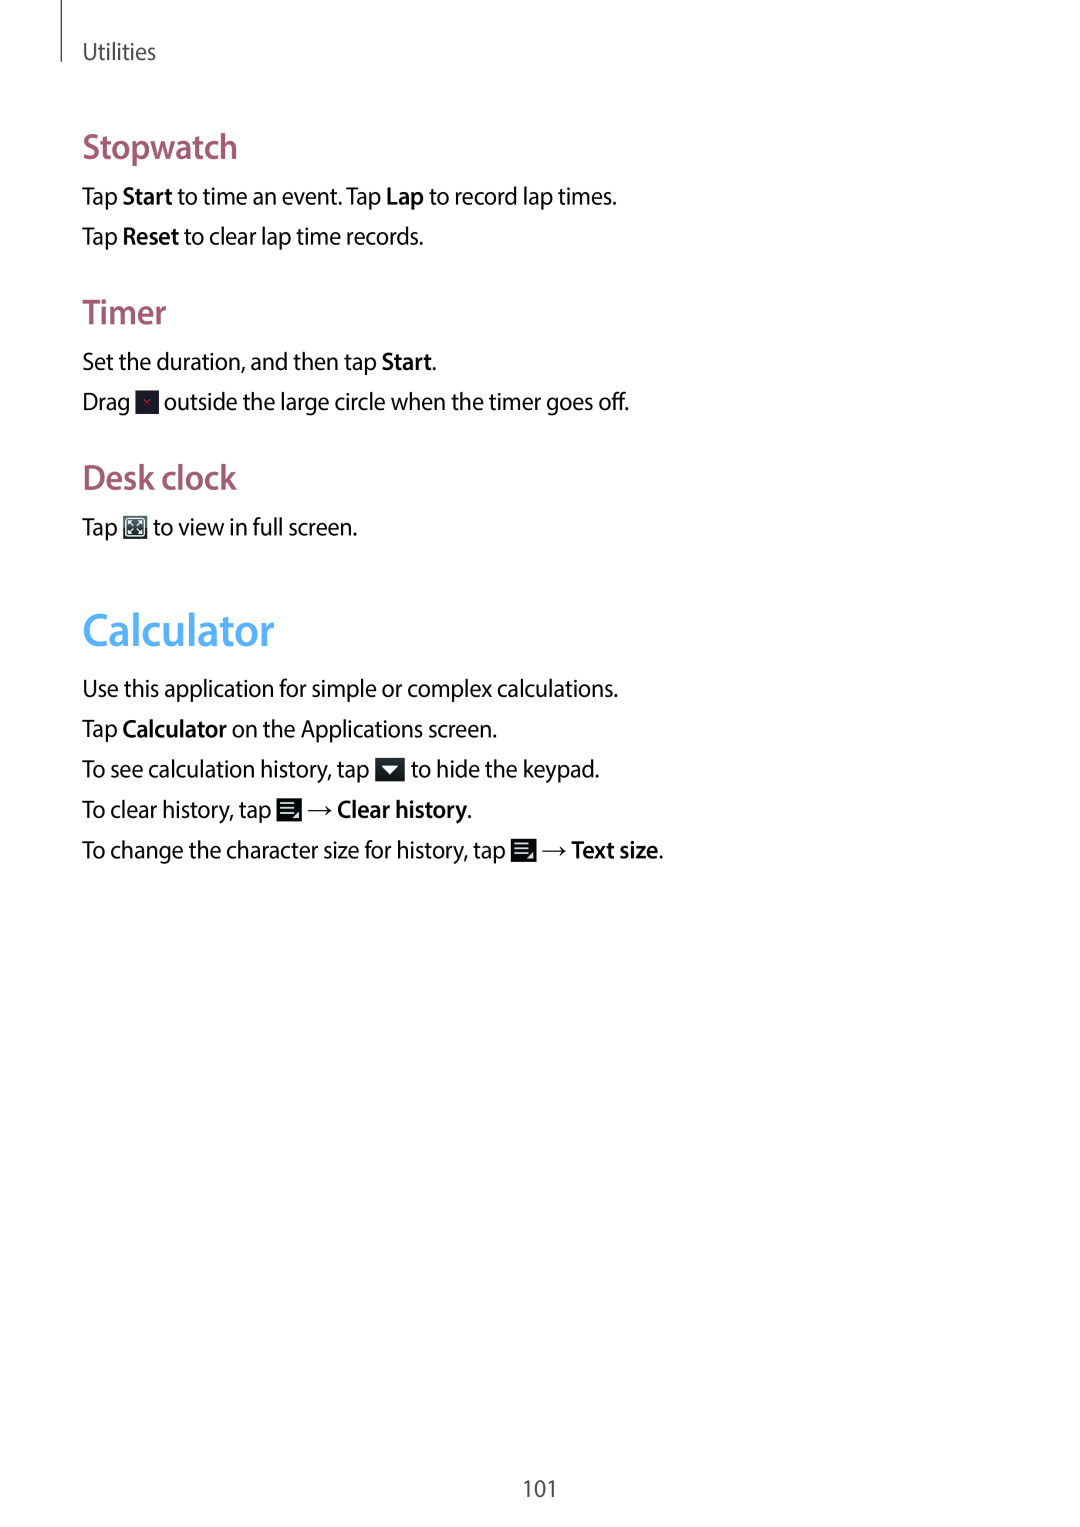 Samsung EK-GC100 user manual Calculator, Stopwatch, Timer, Desk clock, →Clear history, Utilities 